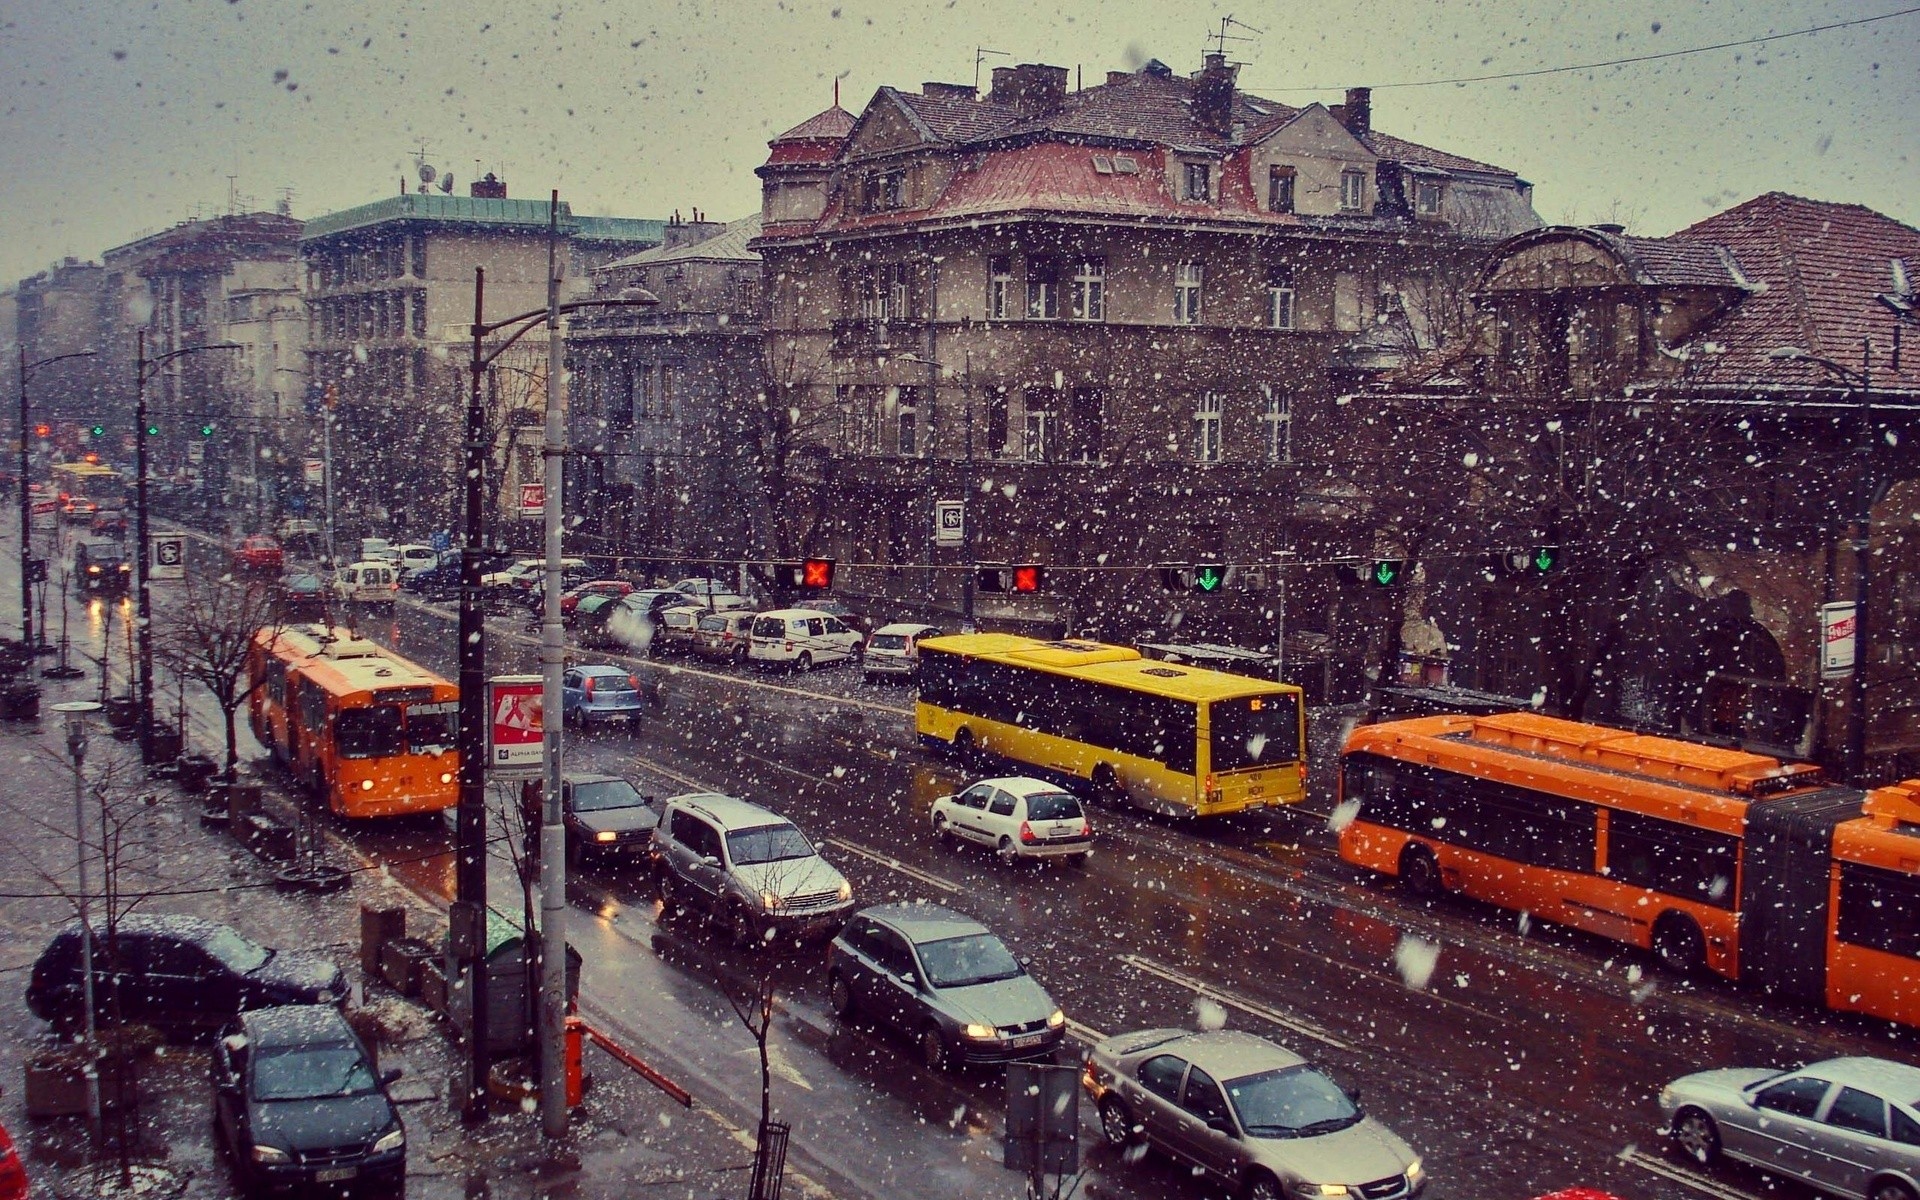 android bus, man made, belgrade, snow, winter, cities